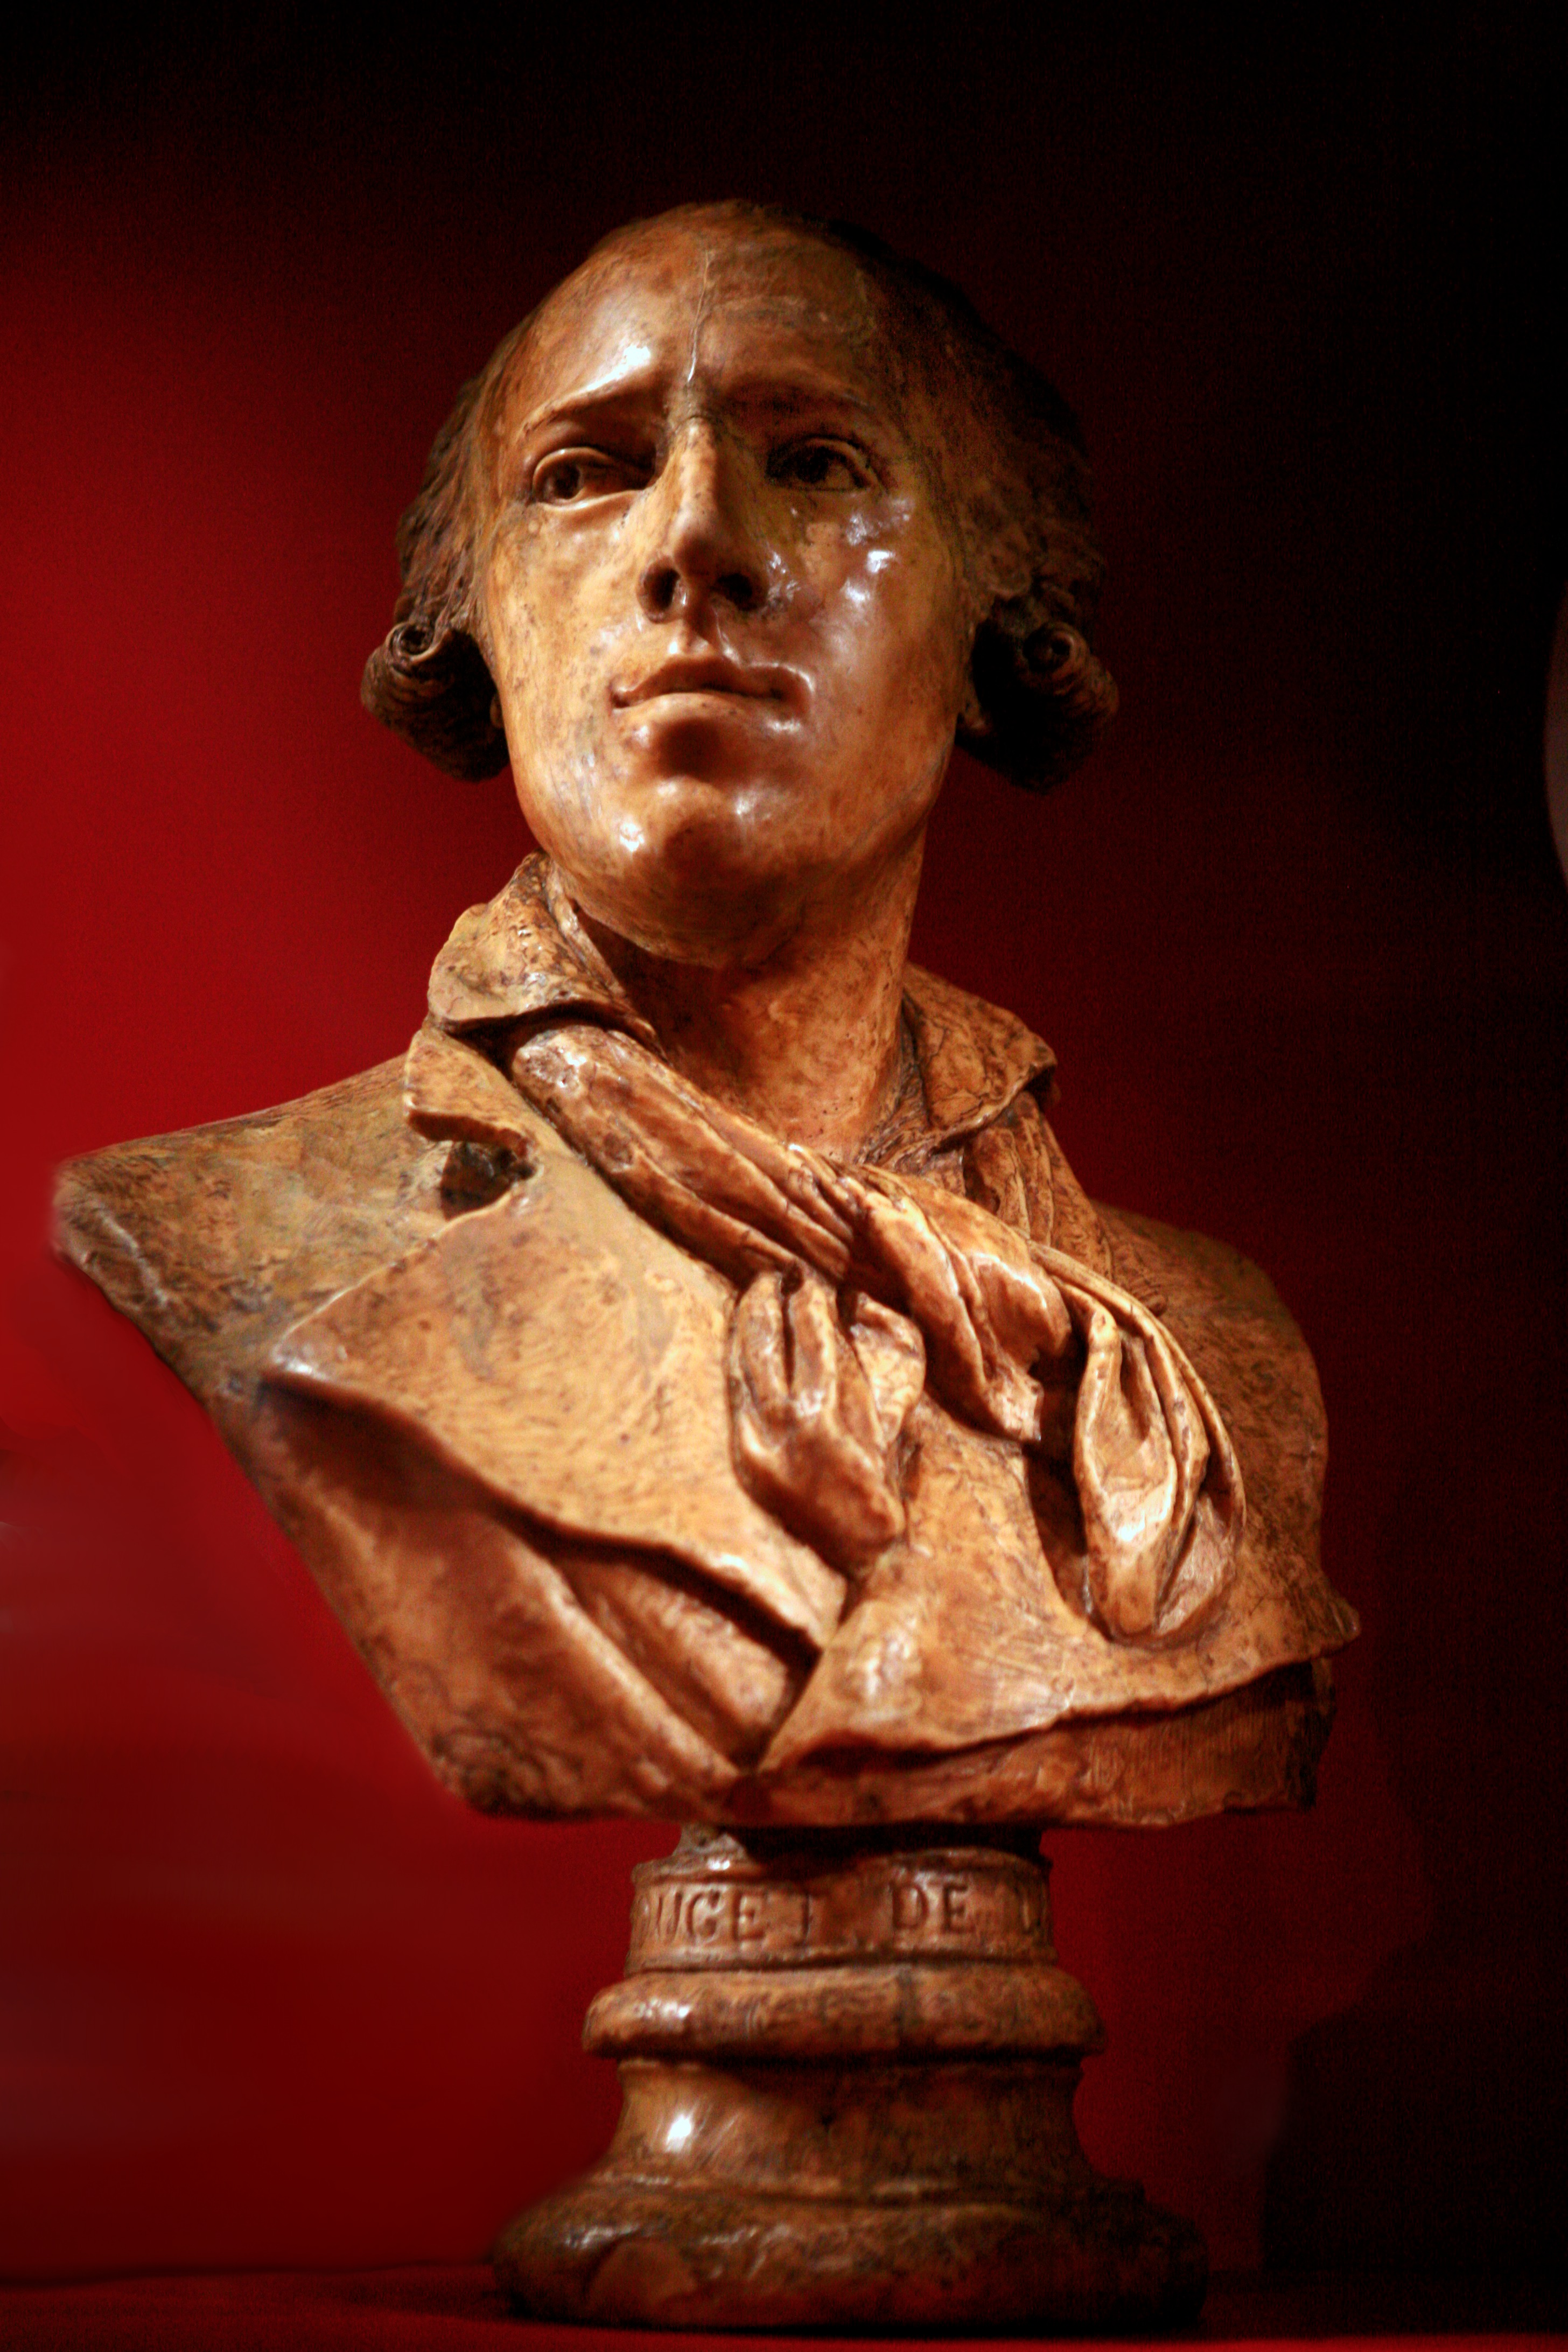 Bust of Rouget de Lisle f4808641